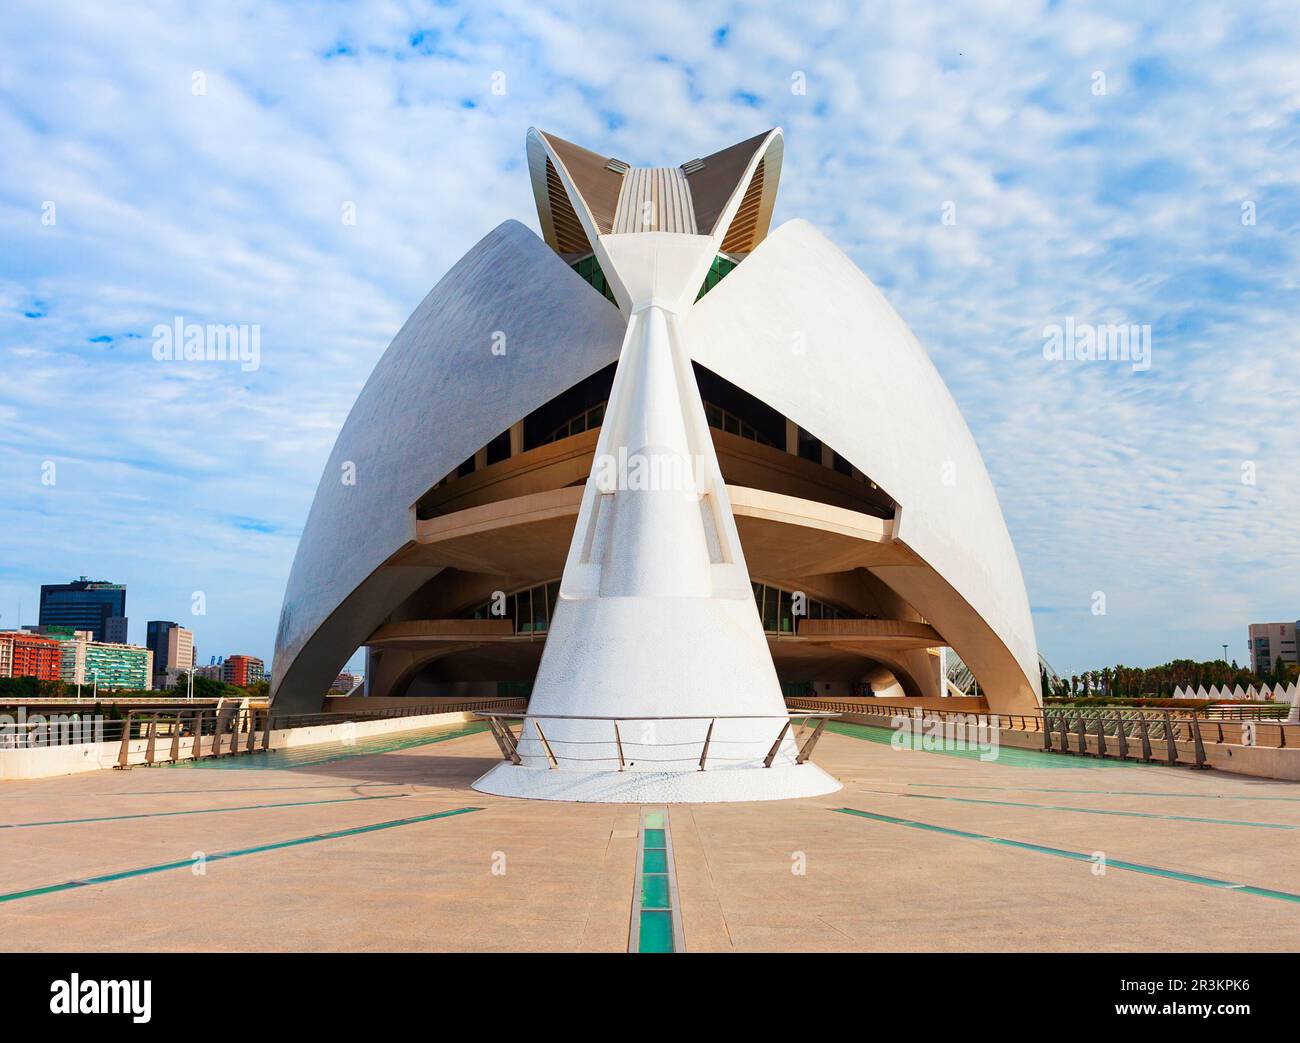 Valencia, Spanien - 16. Oktober 2021: Palau de les Arts Reina Sofia oder Queen Sofia Palace of Arts ist ein Opernhaus, Kunstzentrum von Santiago Calatrava A. Stockfoto